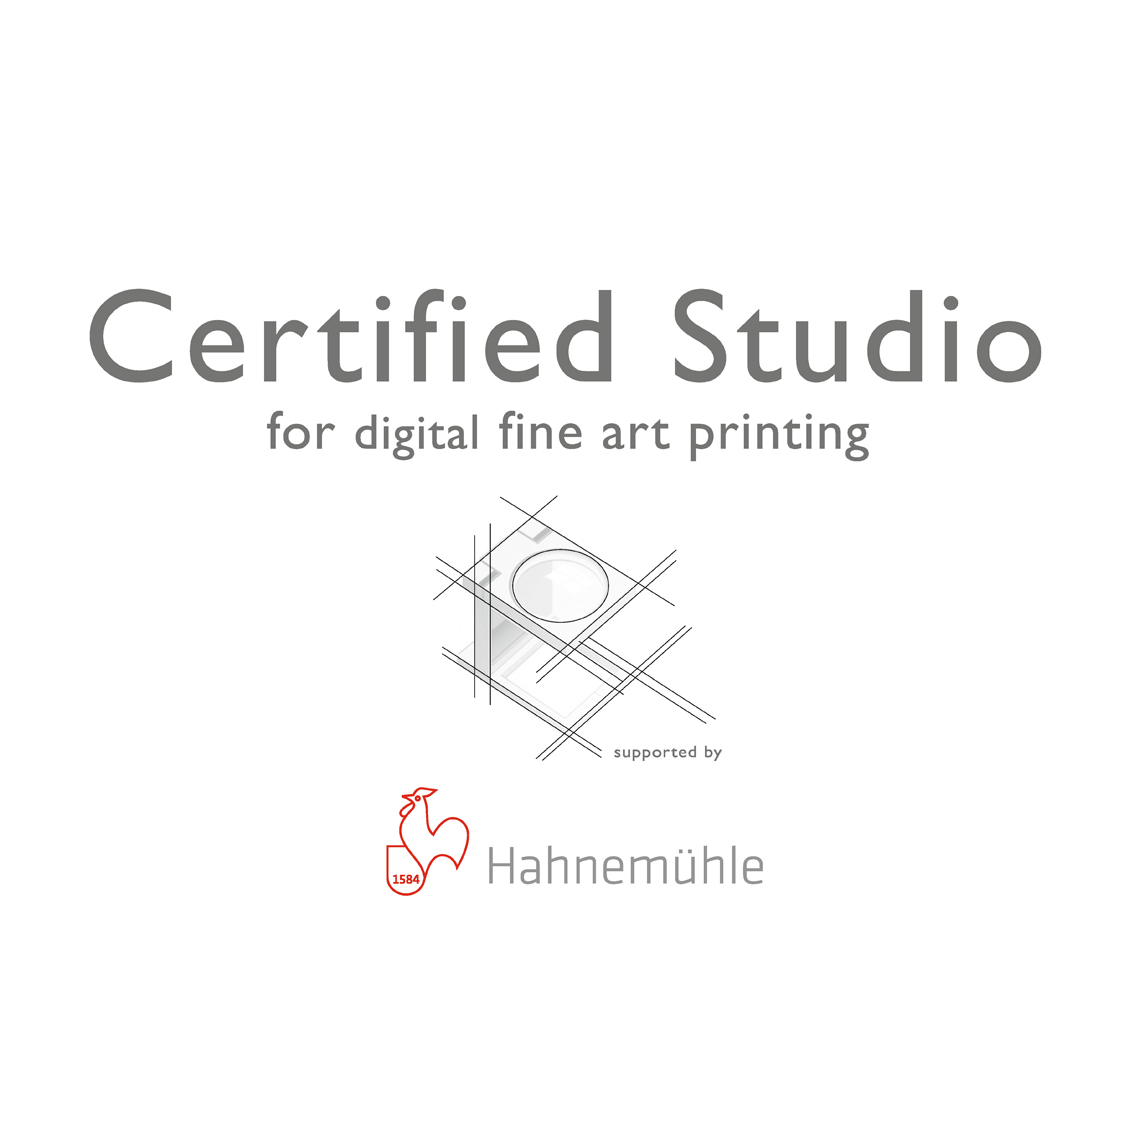 Marc Hesse FineArt ist ein Hahnemühle Certified Studio